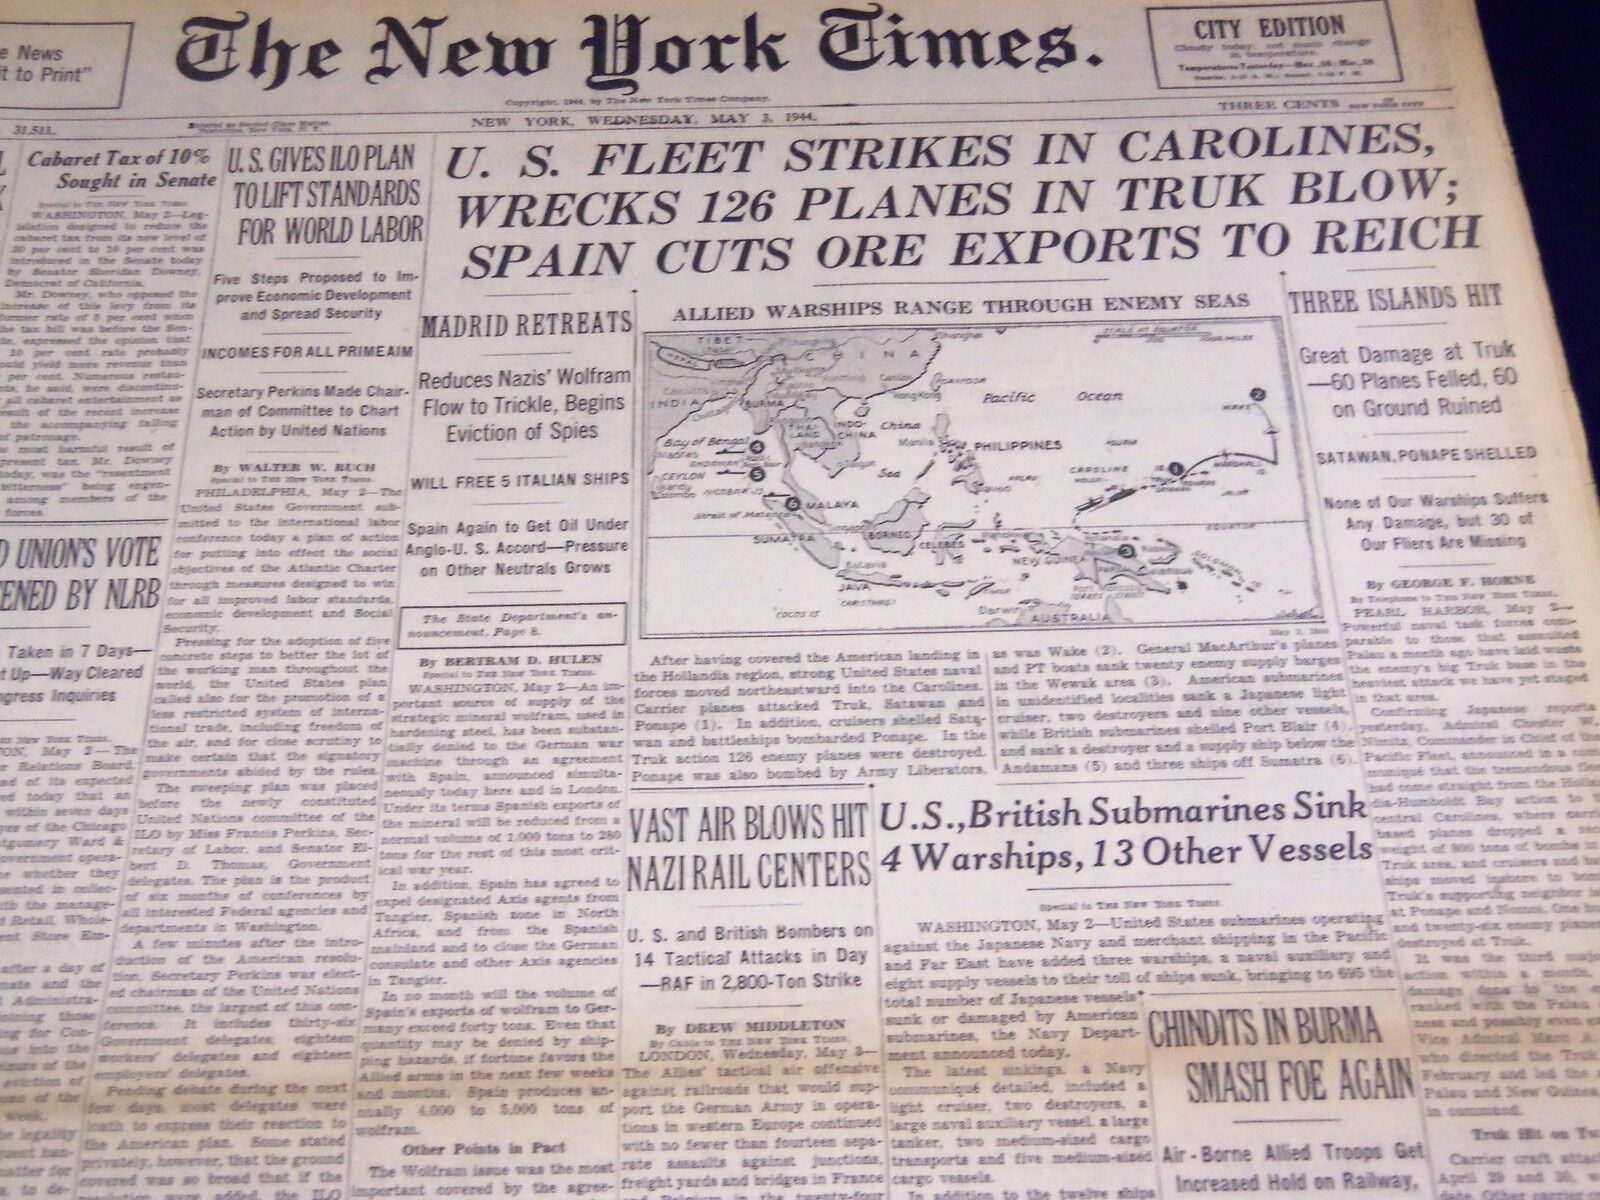 1944 MAY 3 NEW YORK TIMES - U. S. FLEET WRECKS 126 PLANES - NT 2599